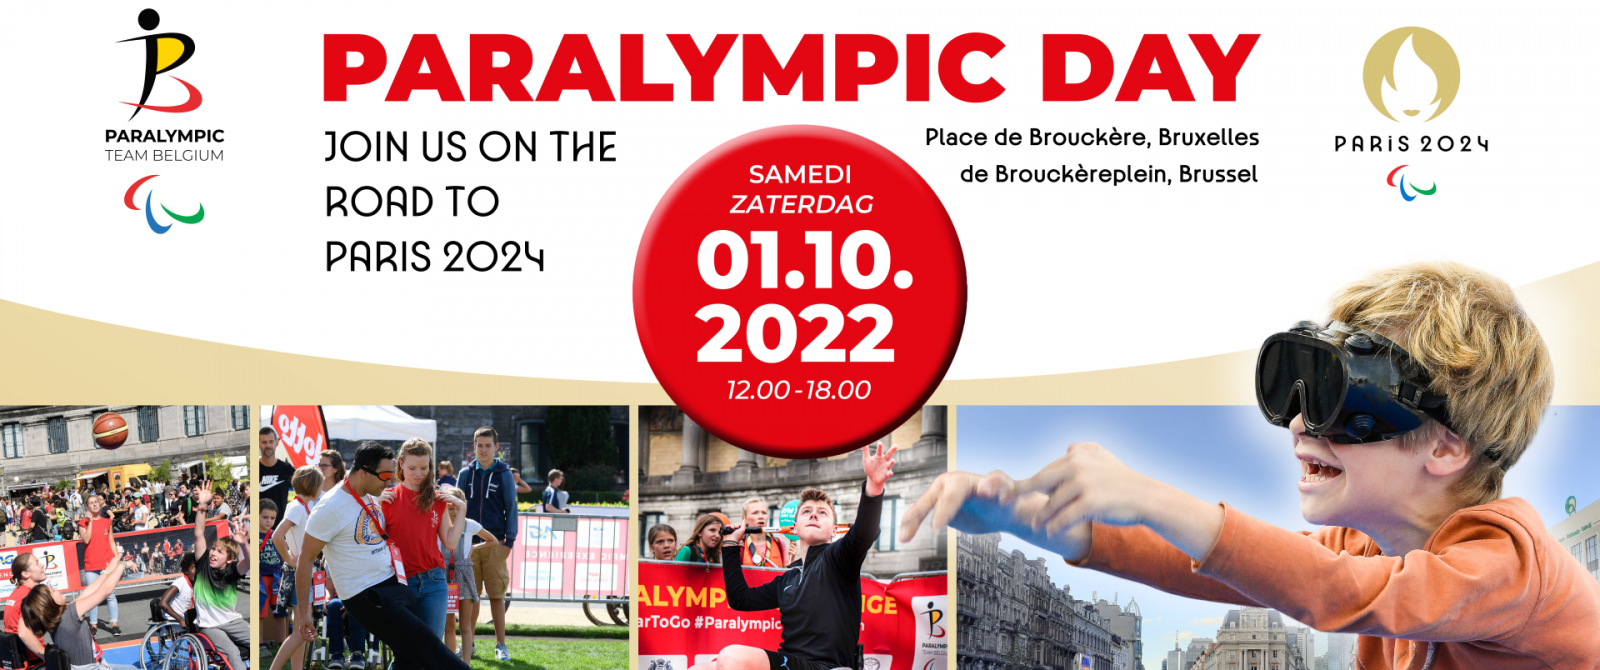 Paralympic Day 2022 samen naar Parijs 2024! Paralympic Team Belgium